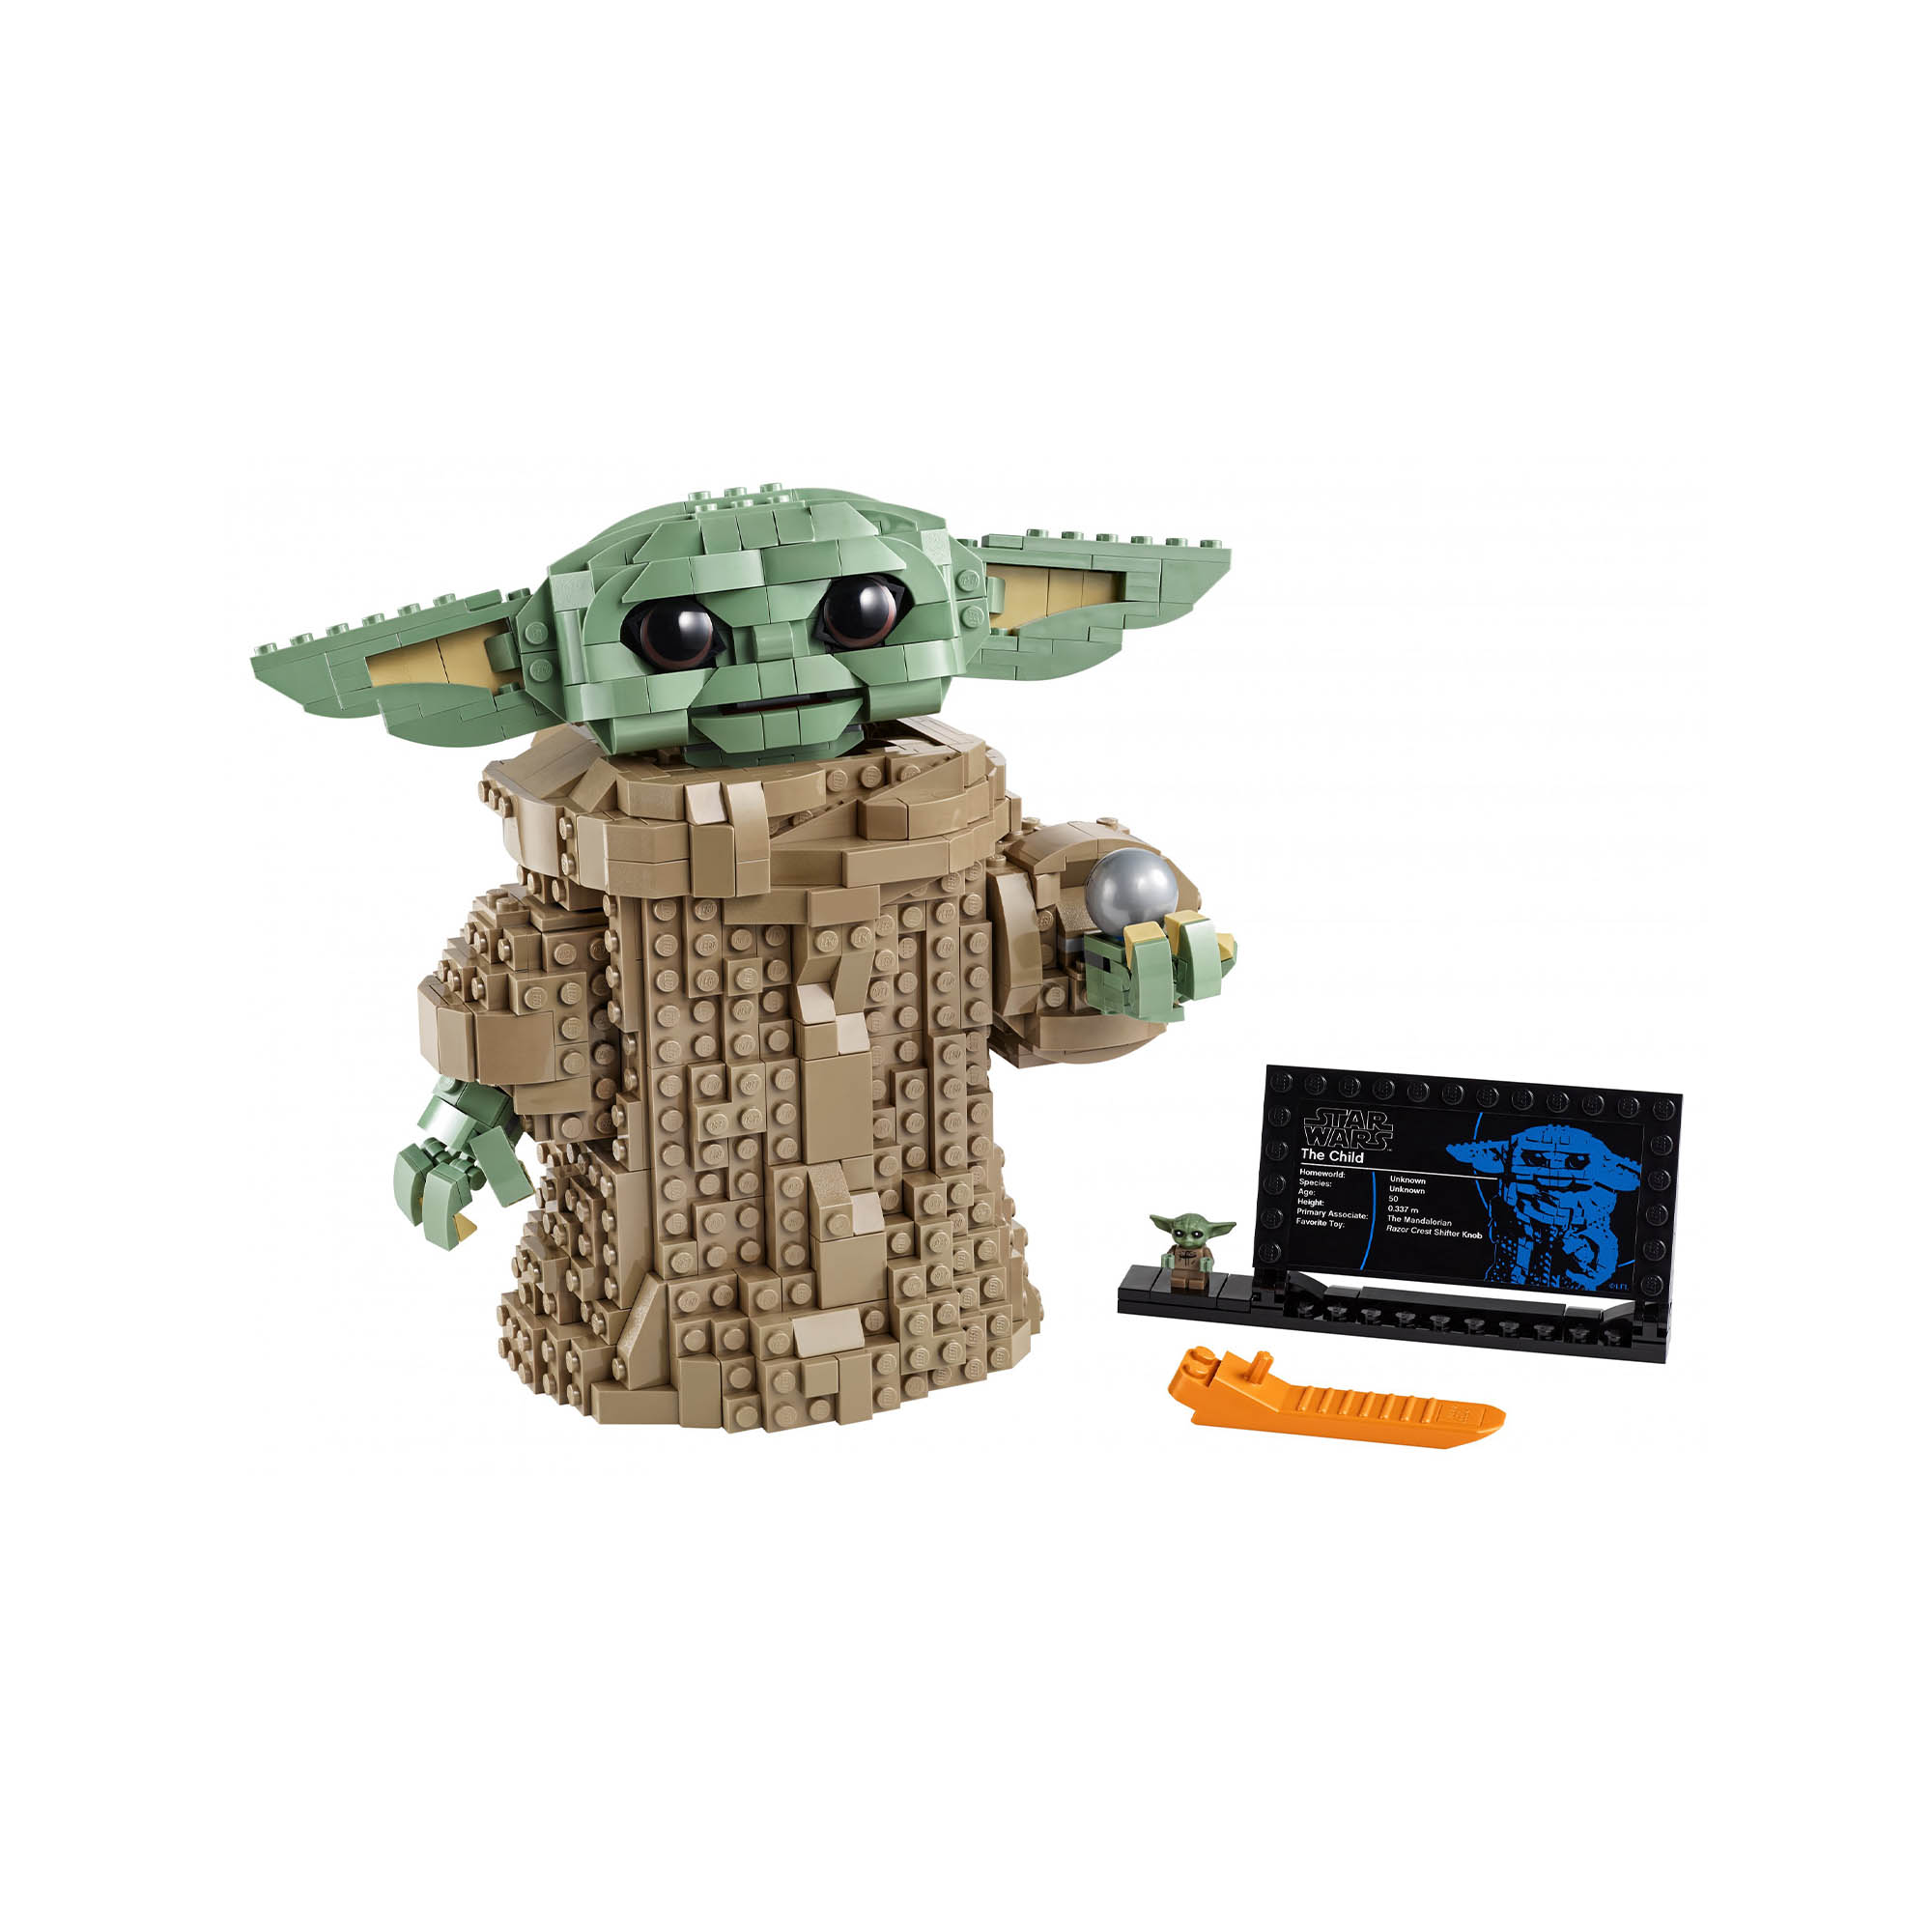 LEGO Star Wars The Mandalorian Il Bambino Baby Yoda, Idea Regalo, 75318 75318, , large